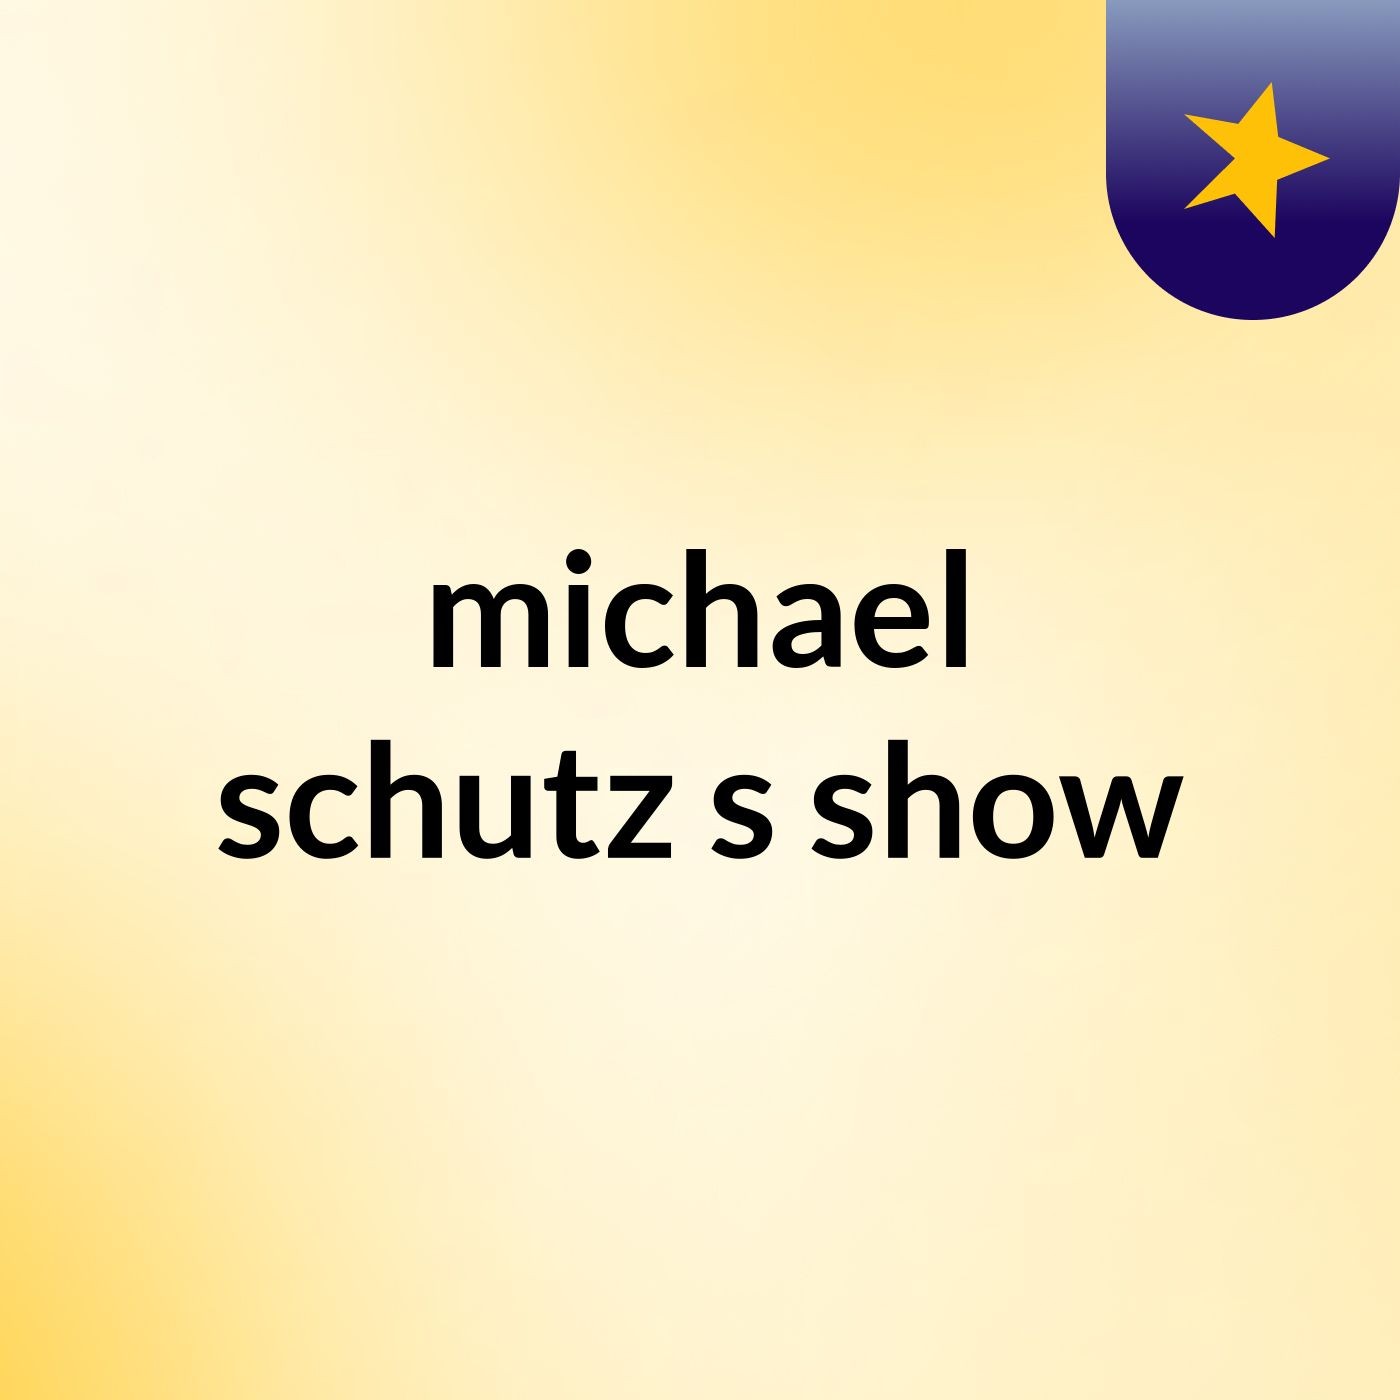 Episode 2 - michael schutz's show